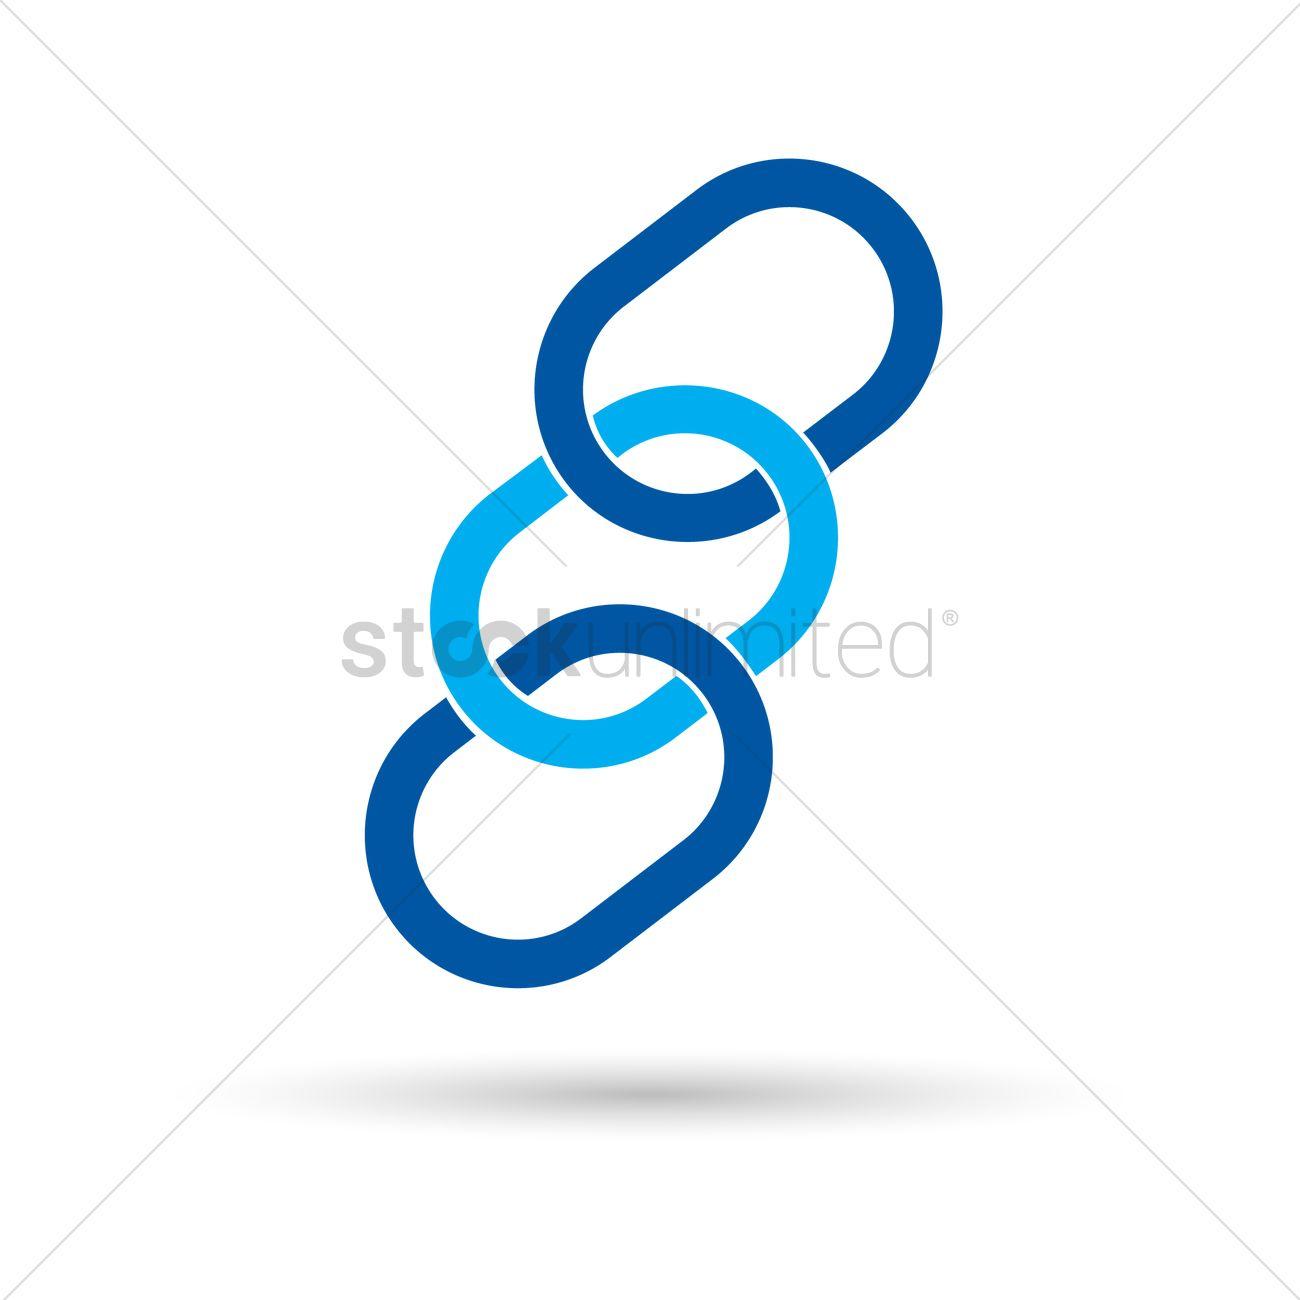 Chain Logo - Chain logo element Vector Image - 1939421 | StockUnlimited